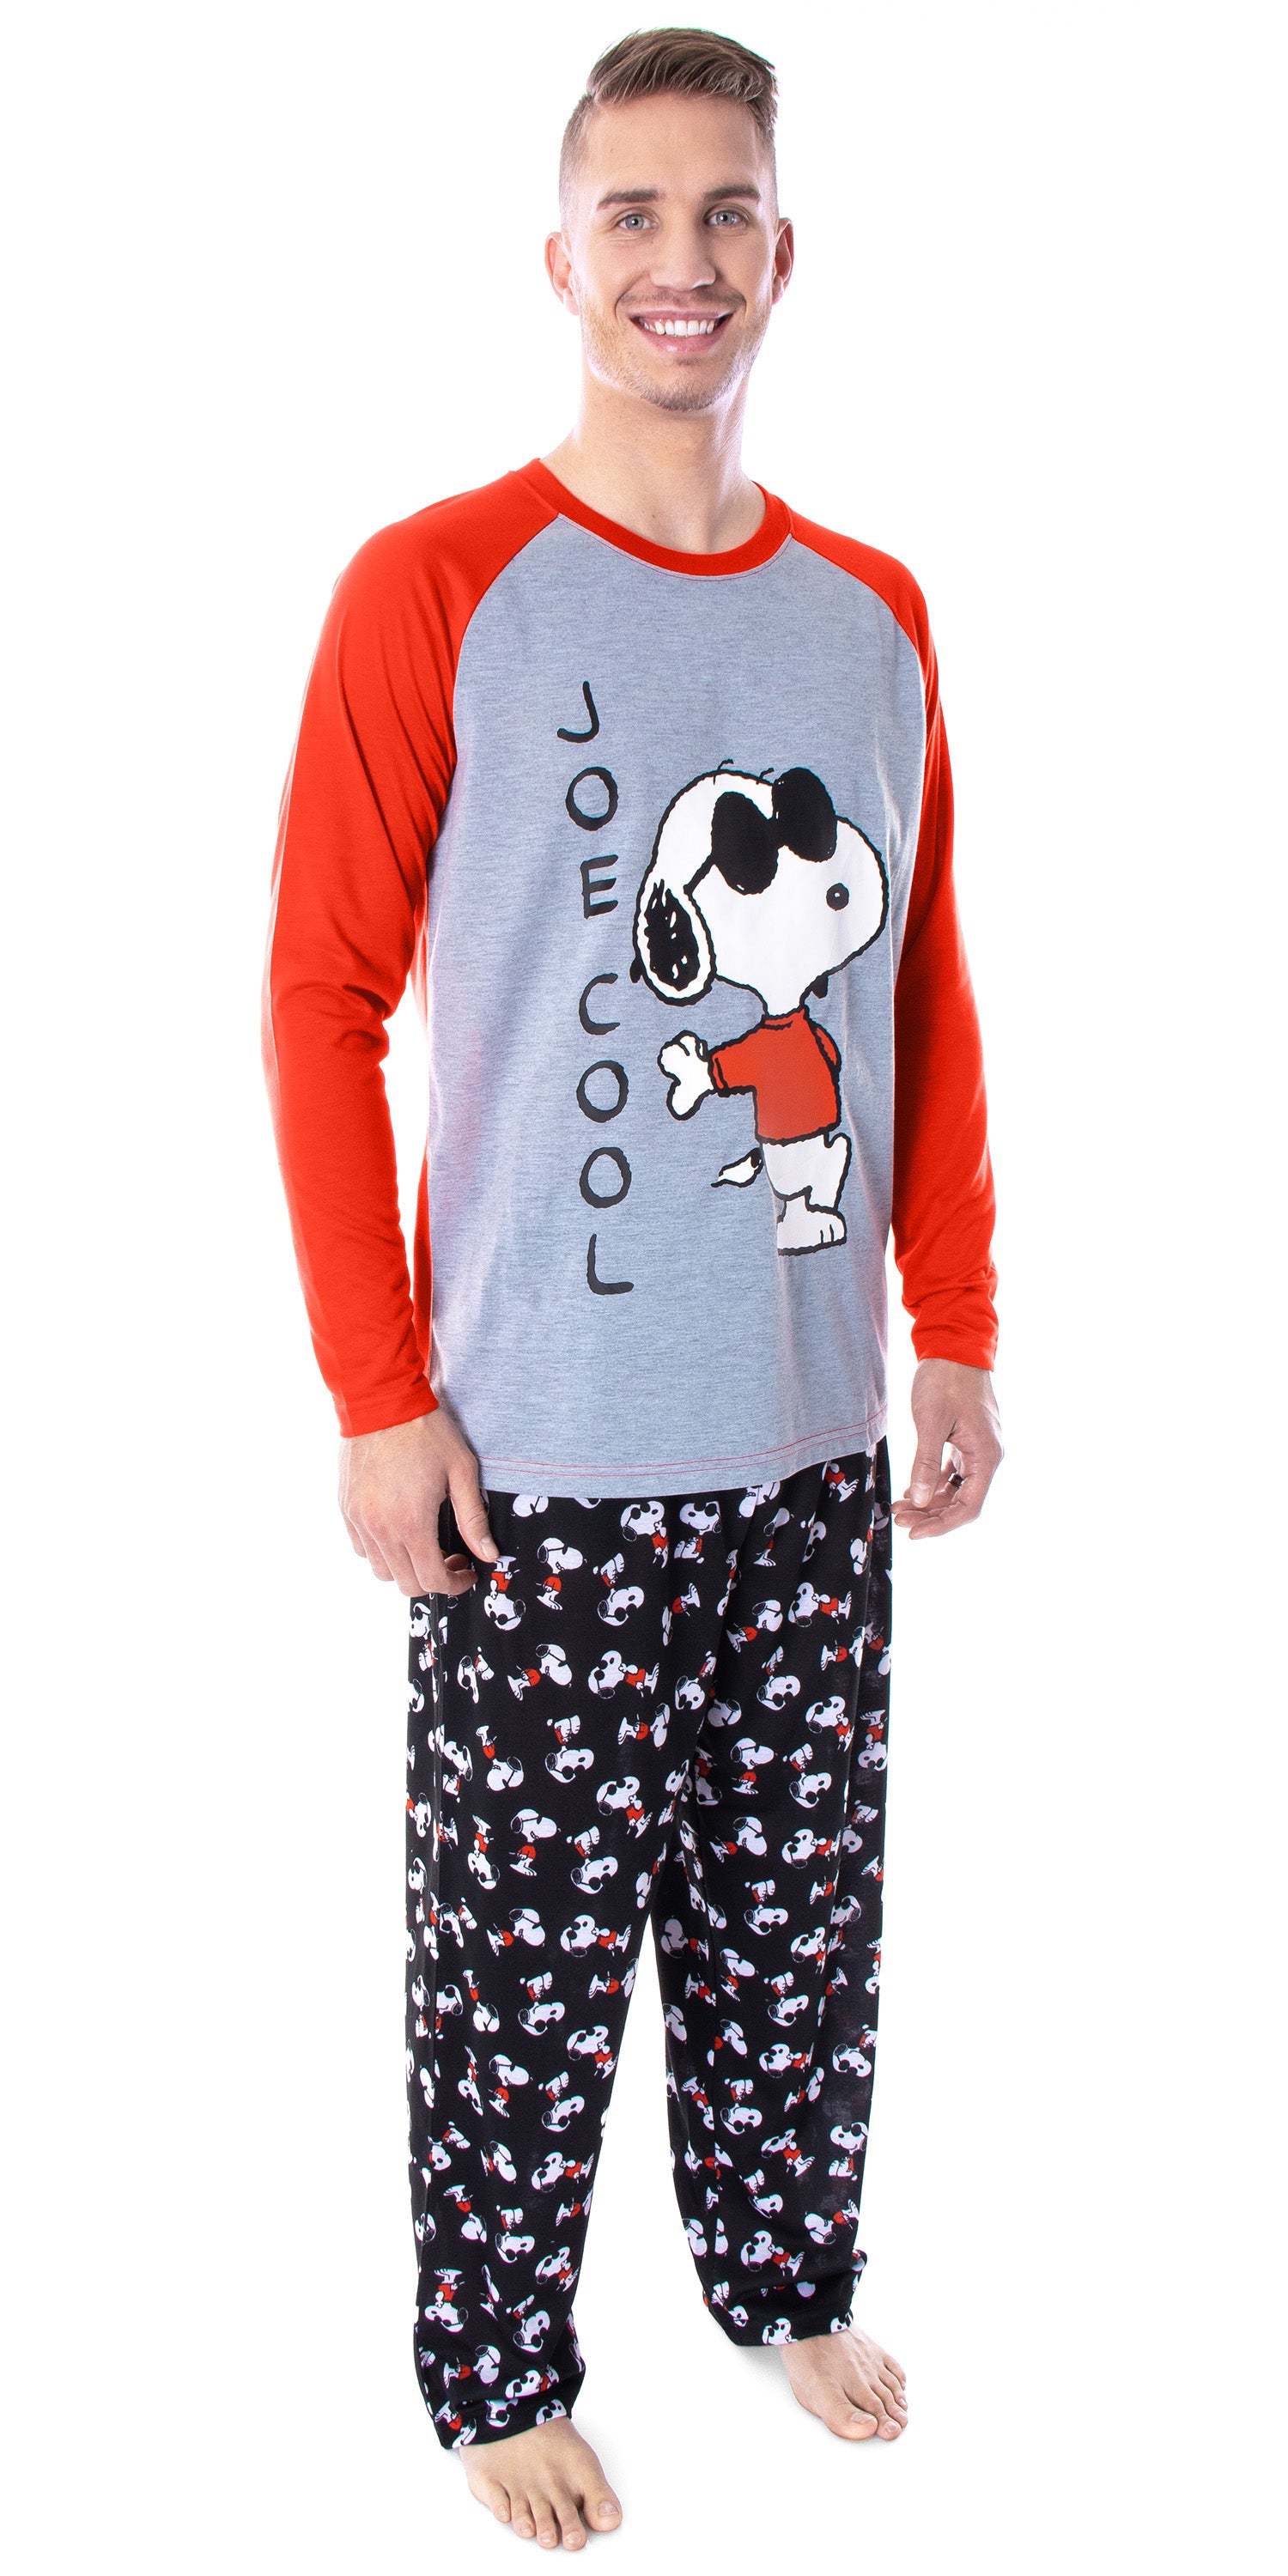 Snoopy & Woodstock His & Hers Matching Pajamas